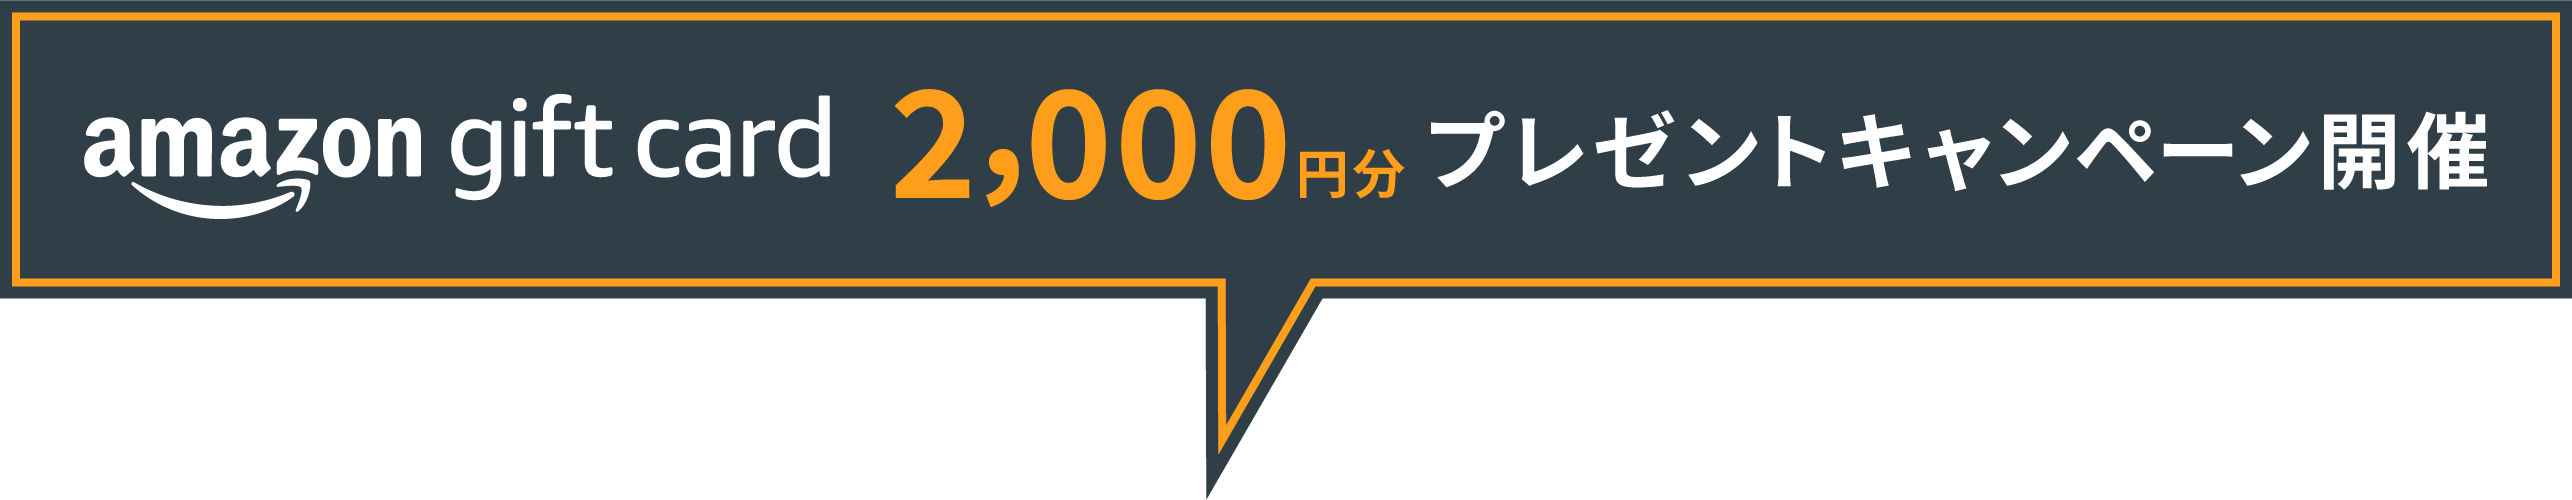 Amazonギフトカード2,000円分プレゼントキャンペーン開催